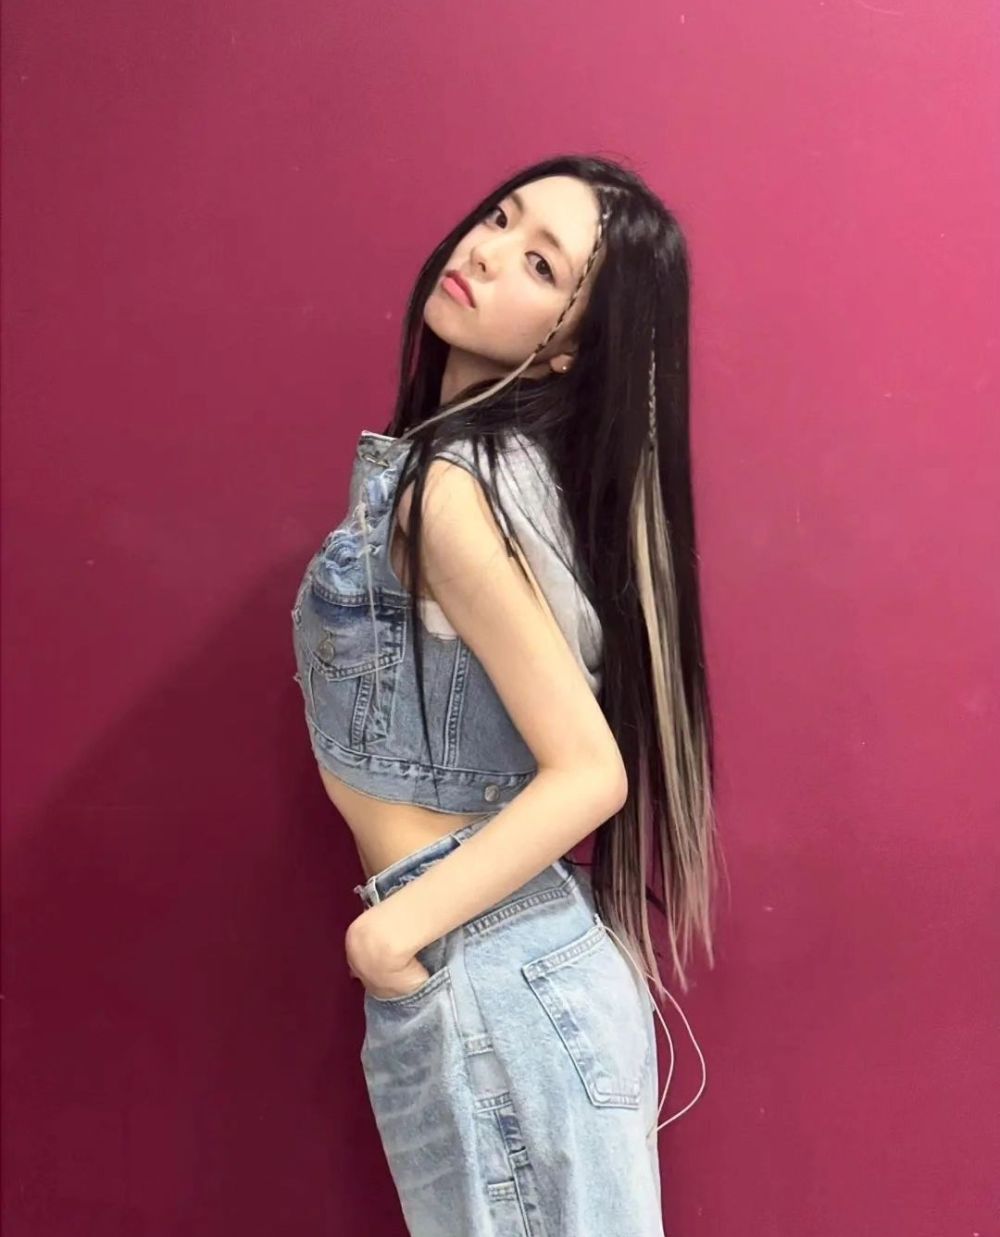 Yu-na Shin Sexy and Hottest Photos , Latest Pics